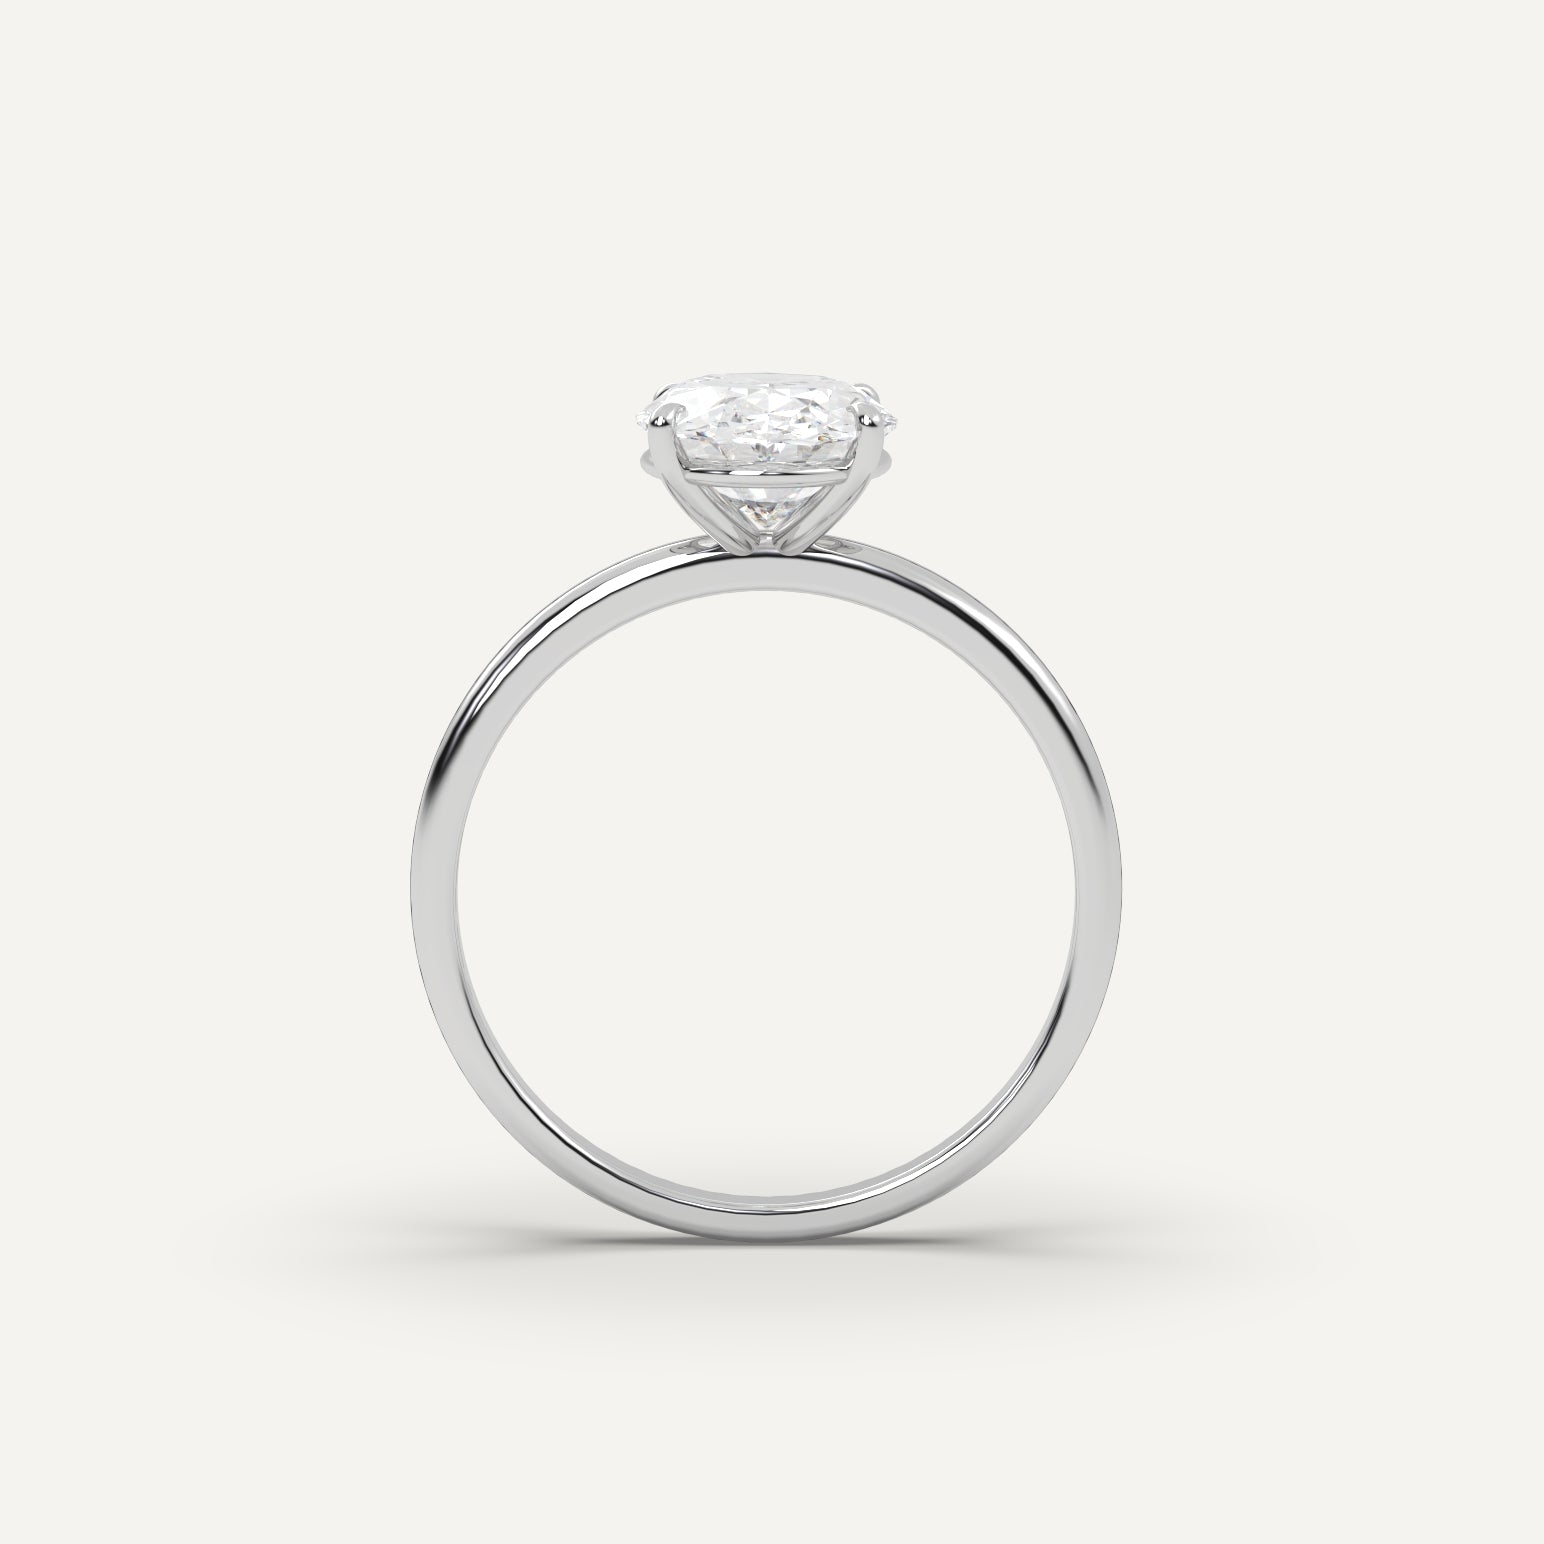 Oval Cut Diamond Engagement Ring - 1.5 carat